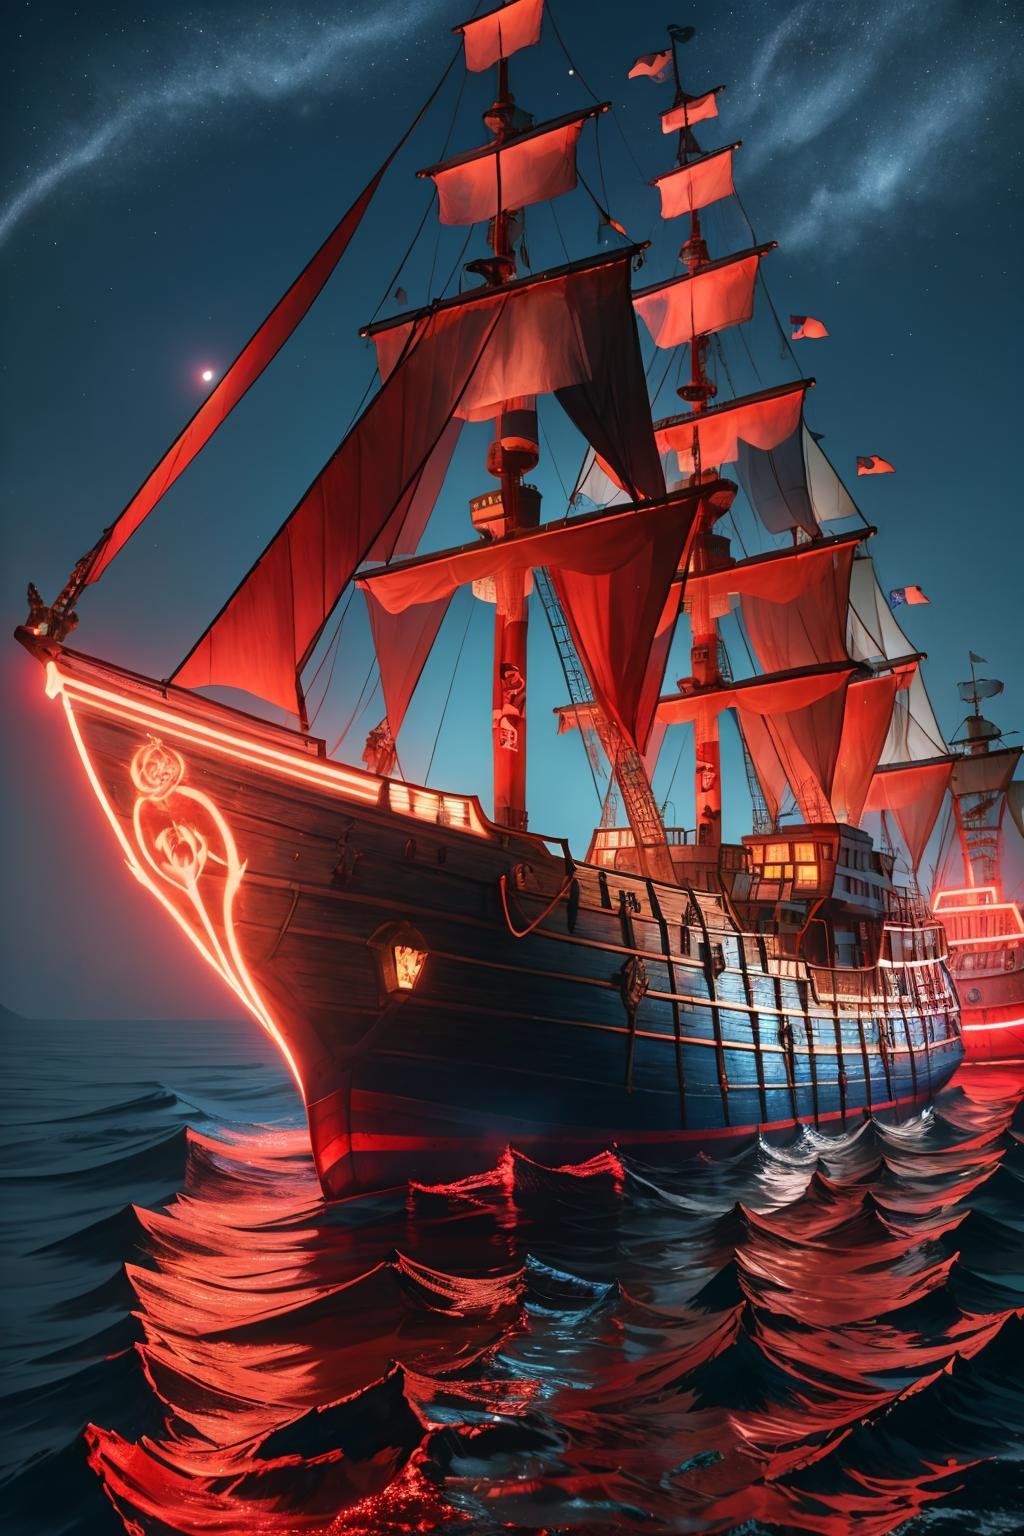 masterpiece, best quality, <lora:redneon-style-richy-v1:1> redneonstyle, glowing, ship, pirate ship, boat, ocean, night, night sky, dark, darkness, red theme